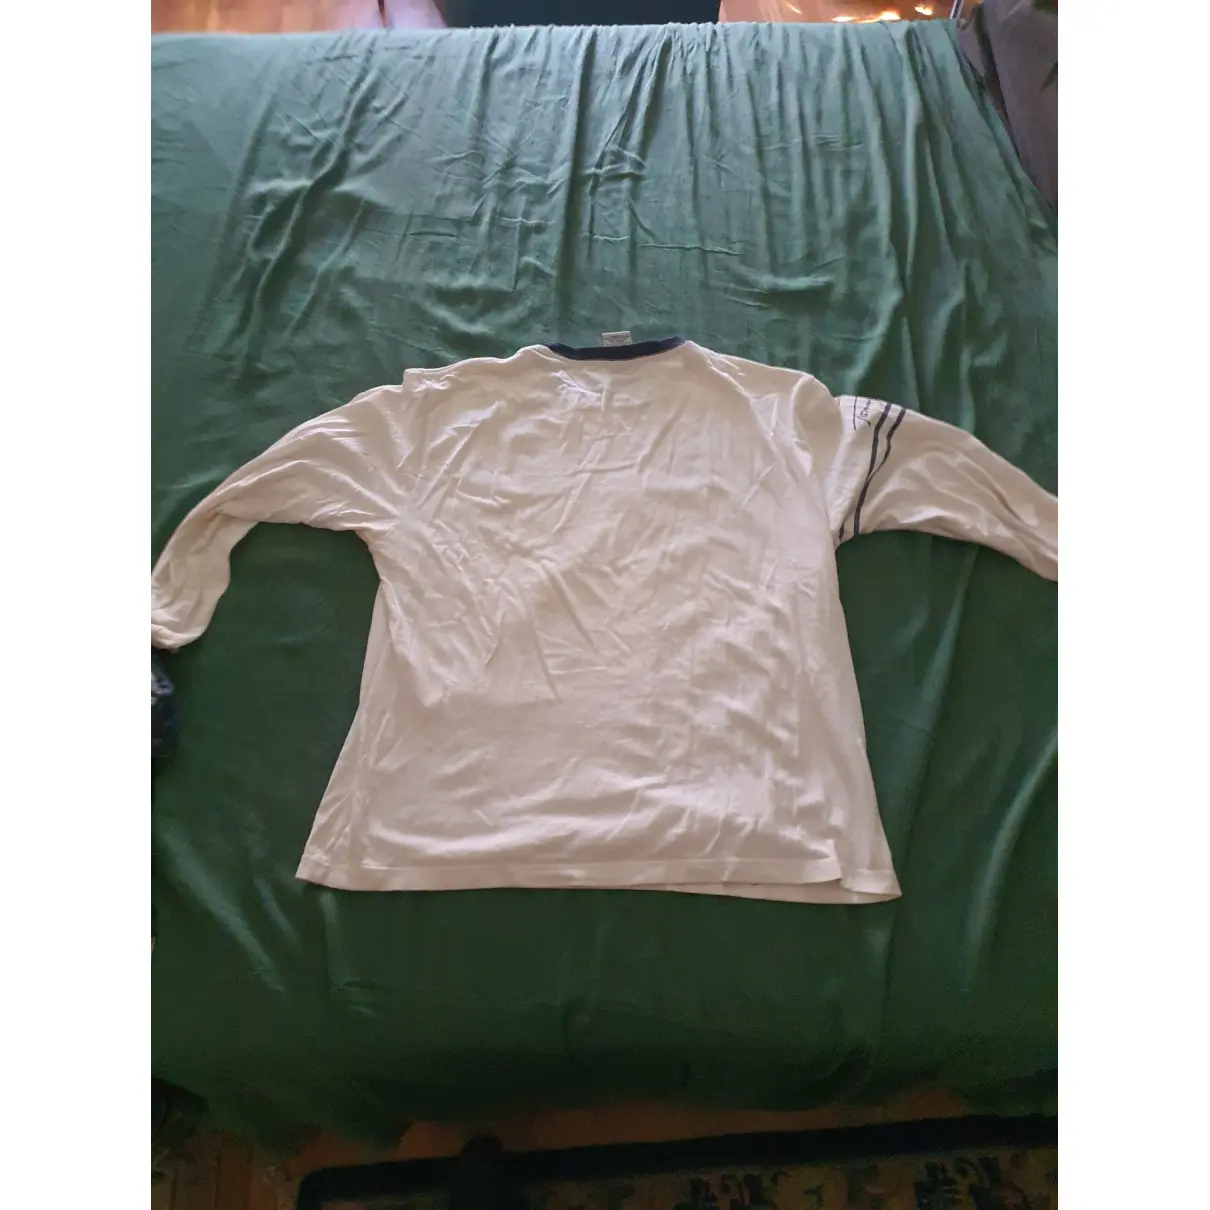 Buy Tommy Hilfiger White Cotton T-shirt online